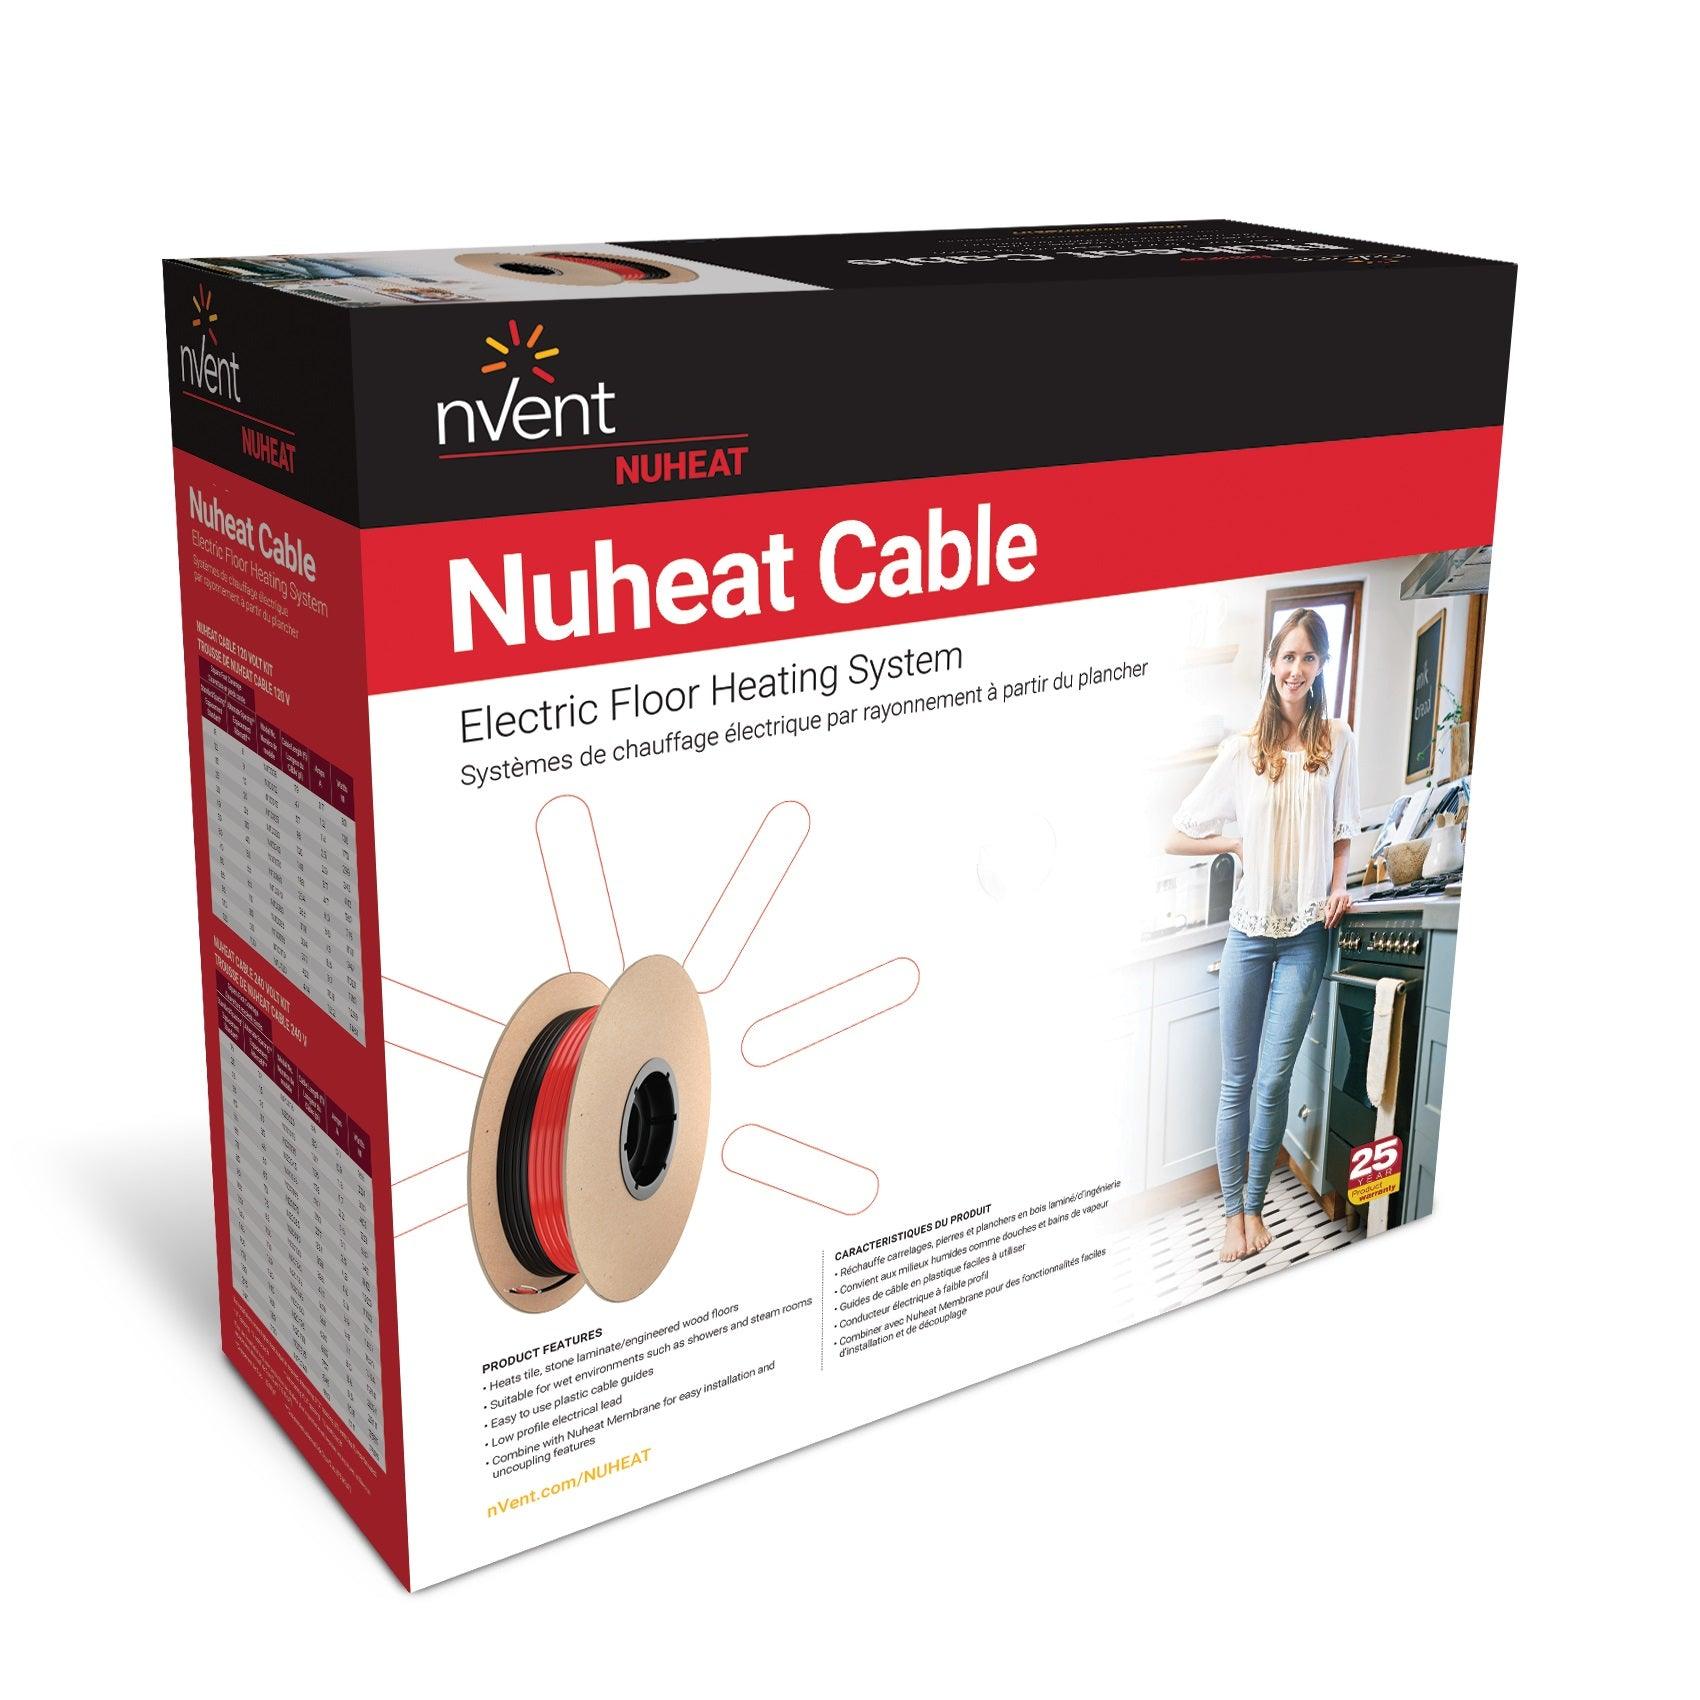 nVent Nuheat Cable Kits, 240V, 240 sq. ft. coverage, Model N2C240 - Orka